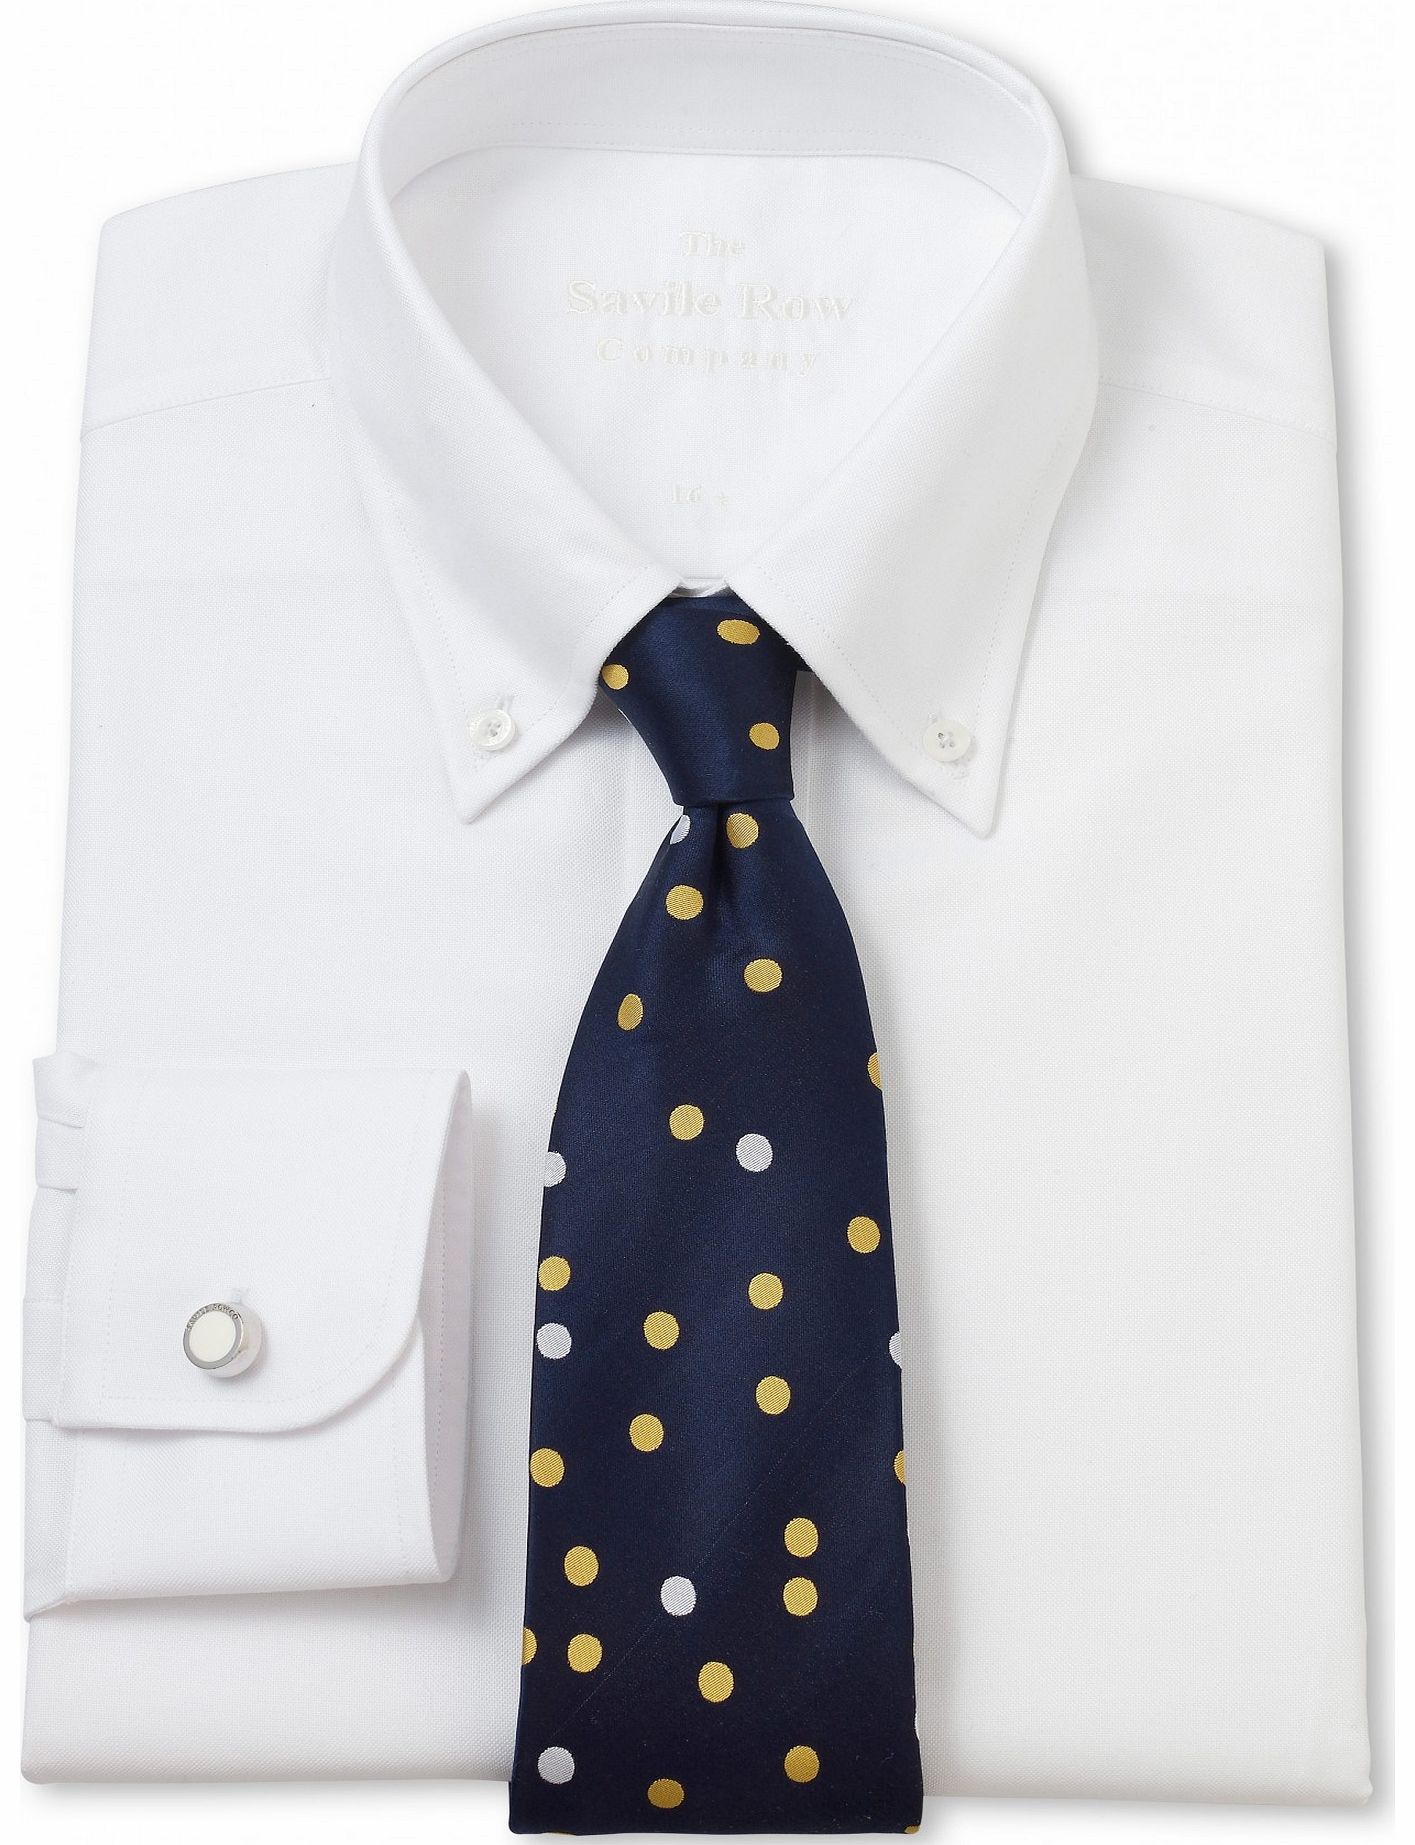 Savile Row Company White Oxford Button Down Slim Fit Shirt 16 1/2``